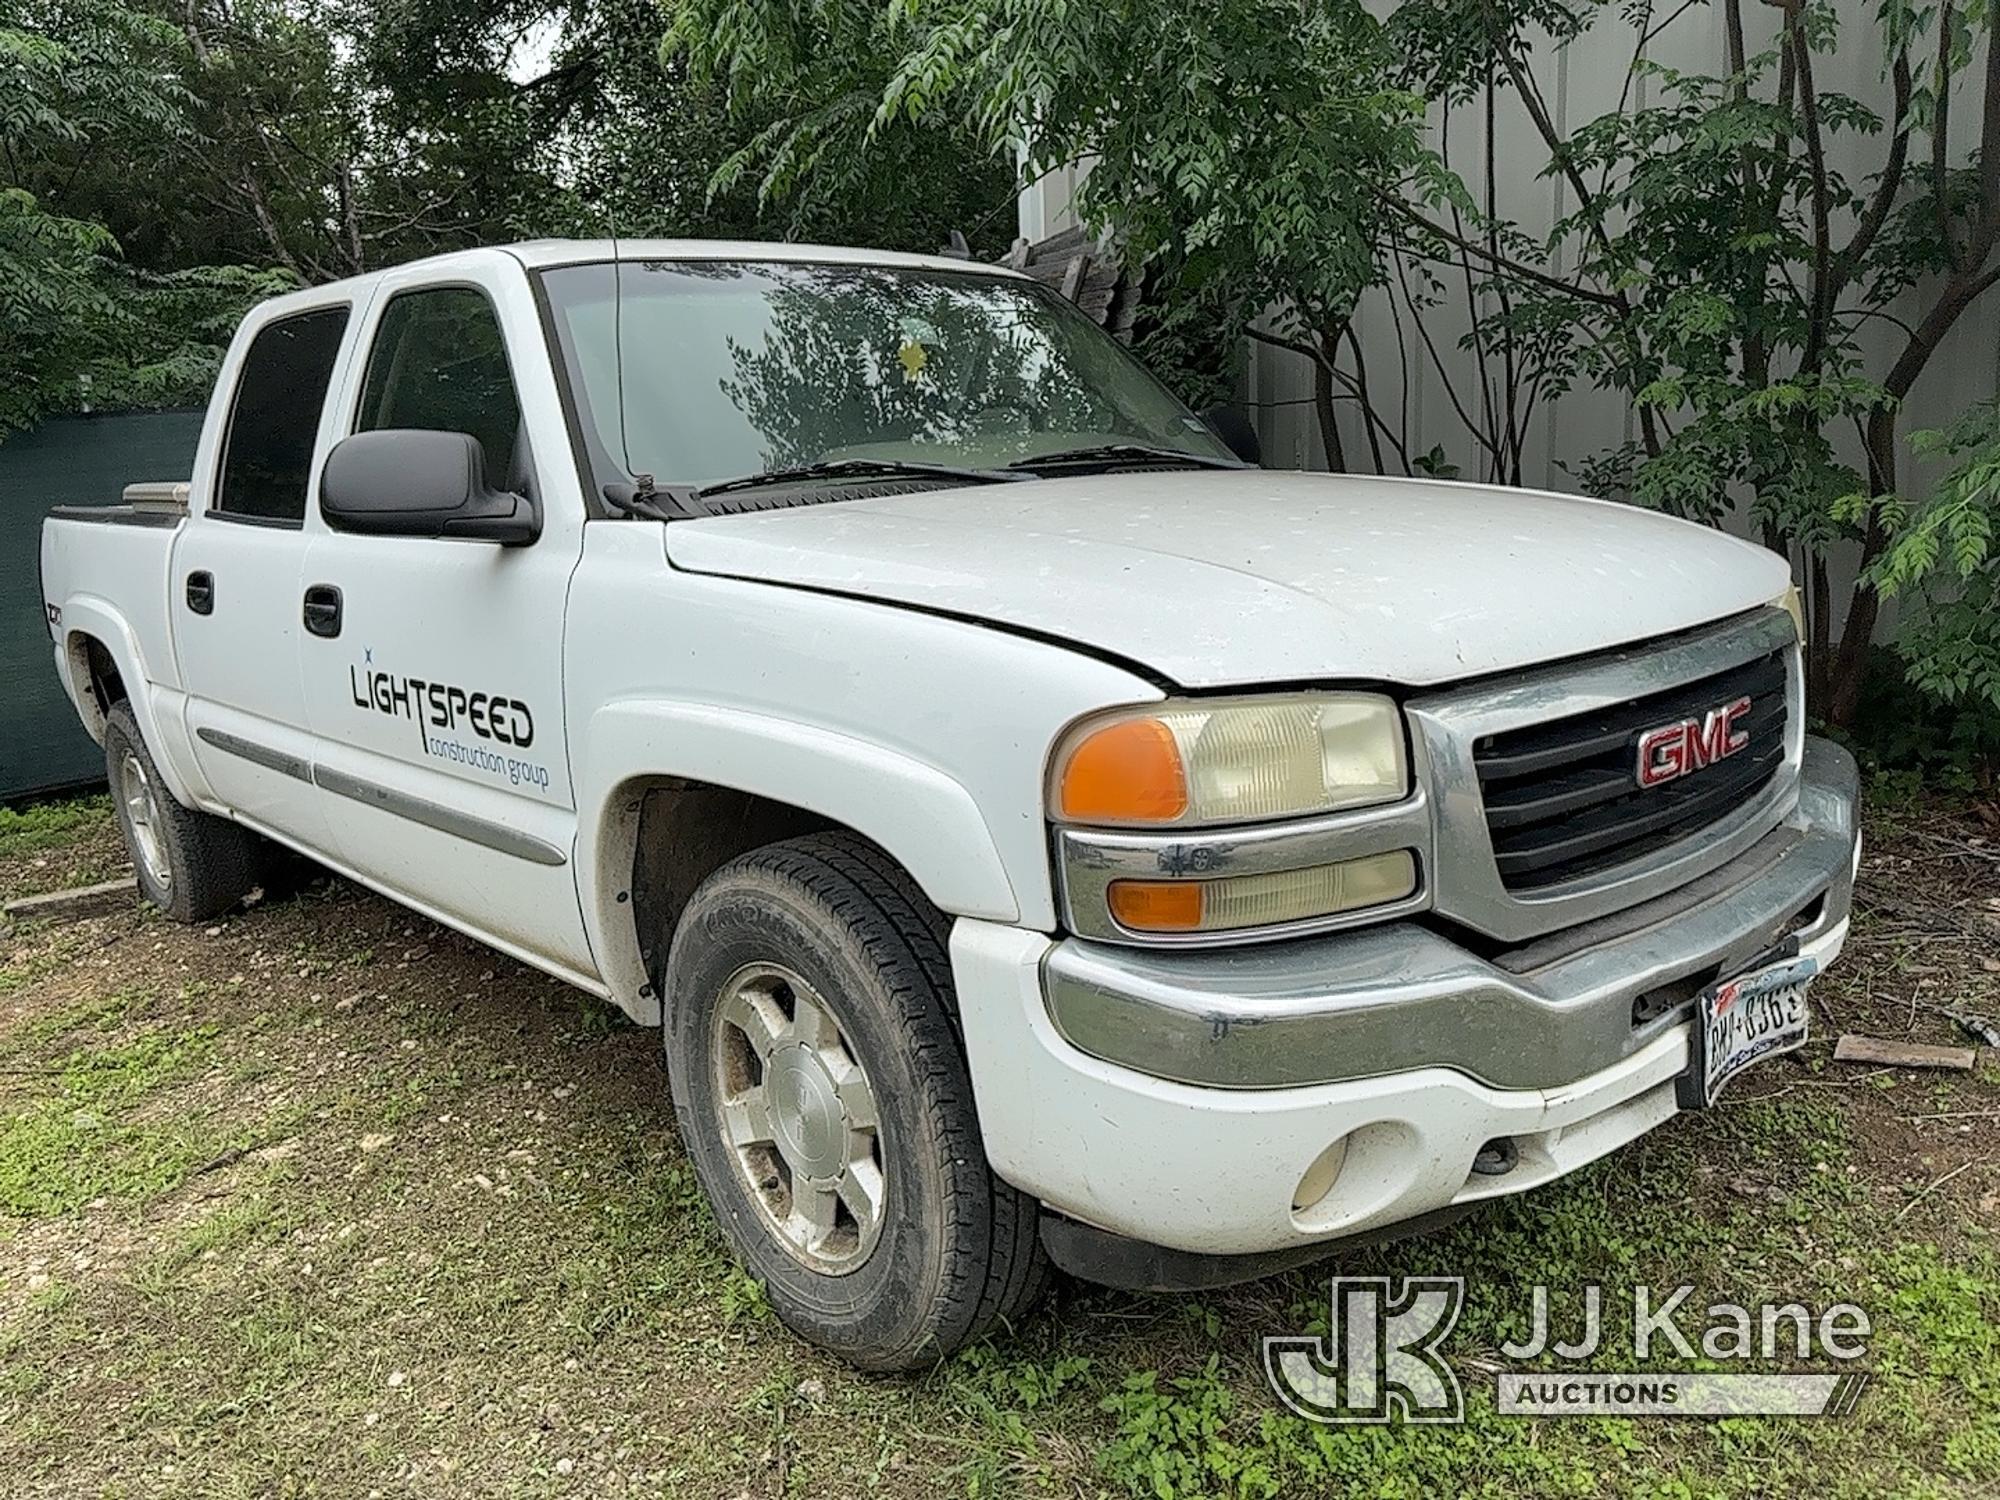 (Austin, TX) 2006 GMC Sierra 1500 4x4 Crew-Cab Pickup Truck Not Running, Condition Unknown) (Missing